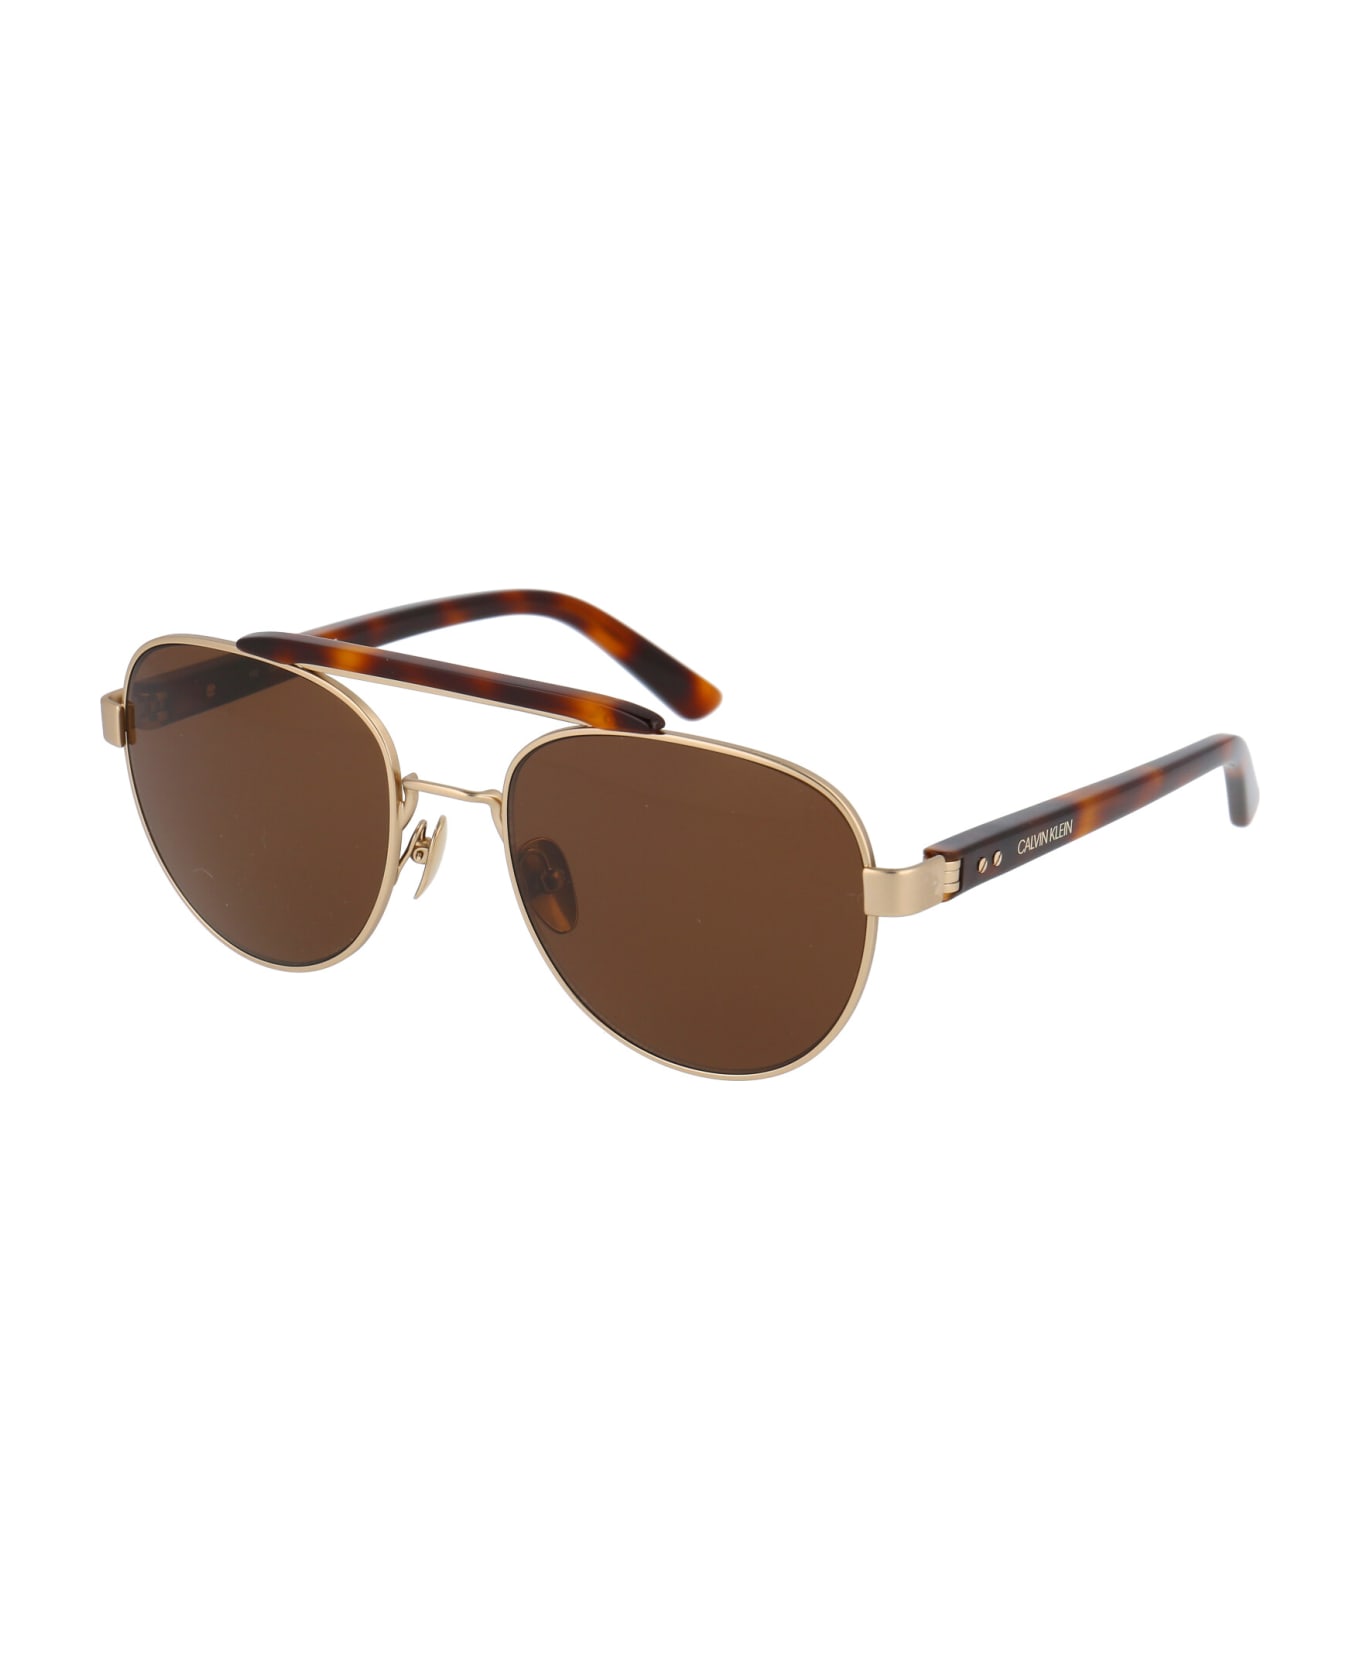 Calvin Klein Ck19306s Sunglasses - 240 SOFT TORTOISE サングラス